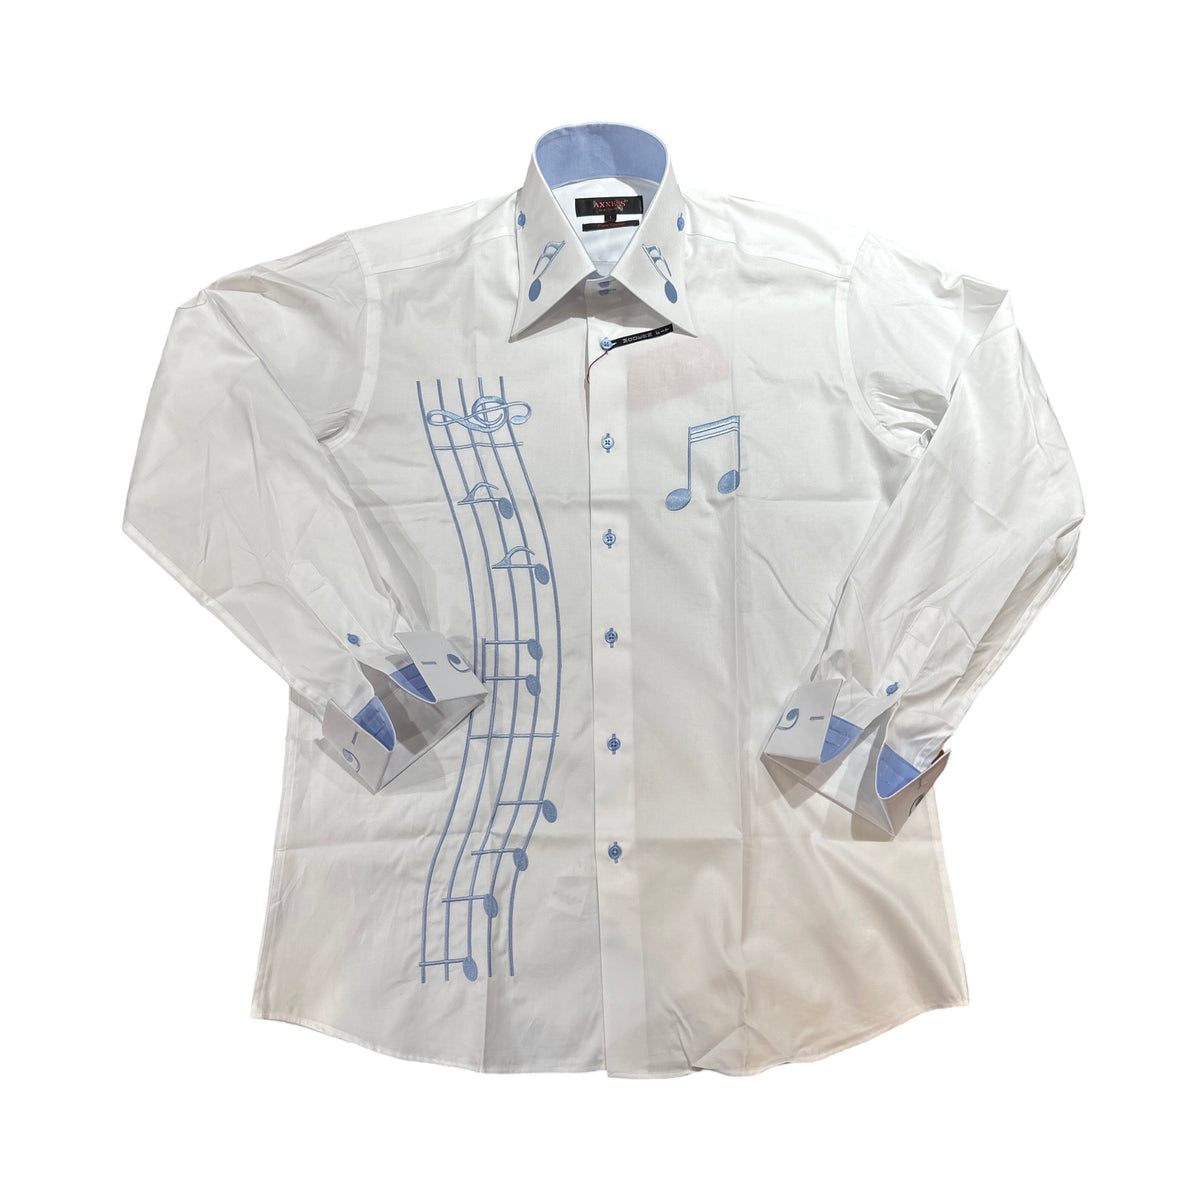 Axxess White & Blue Music Button Up Shirt - Dudes Boutique